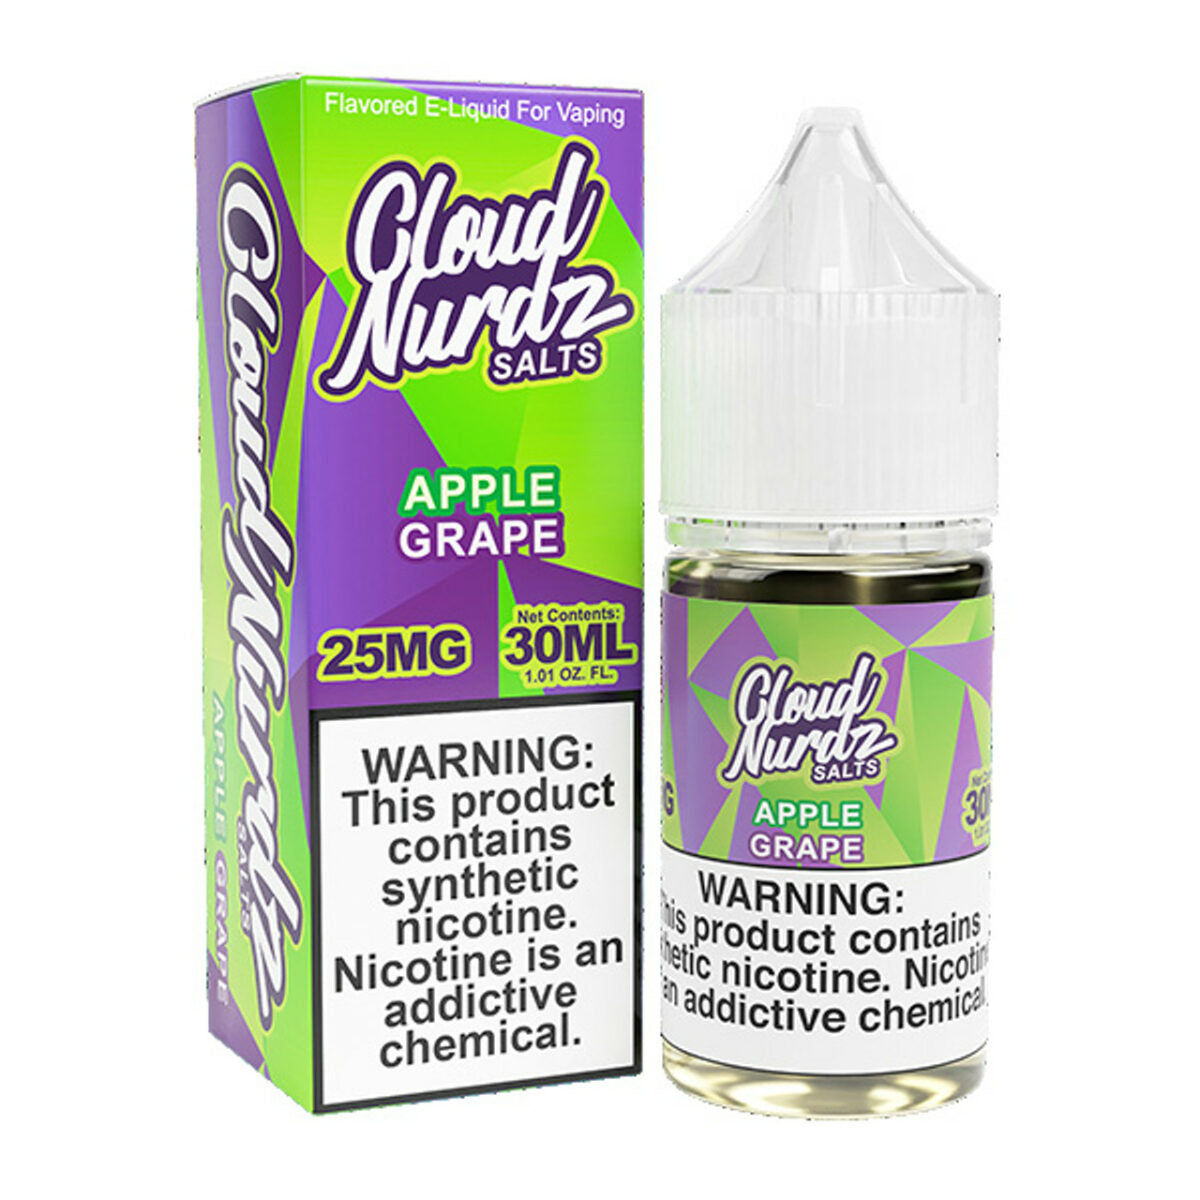 Cloud Nurdz Salt Series E-Liquid 30mL Grape Apple with packaging